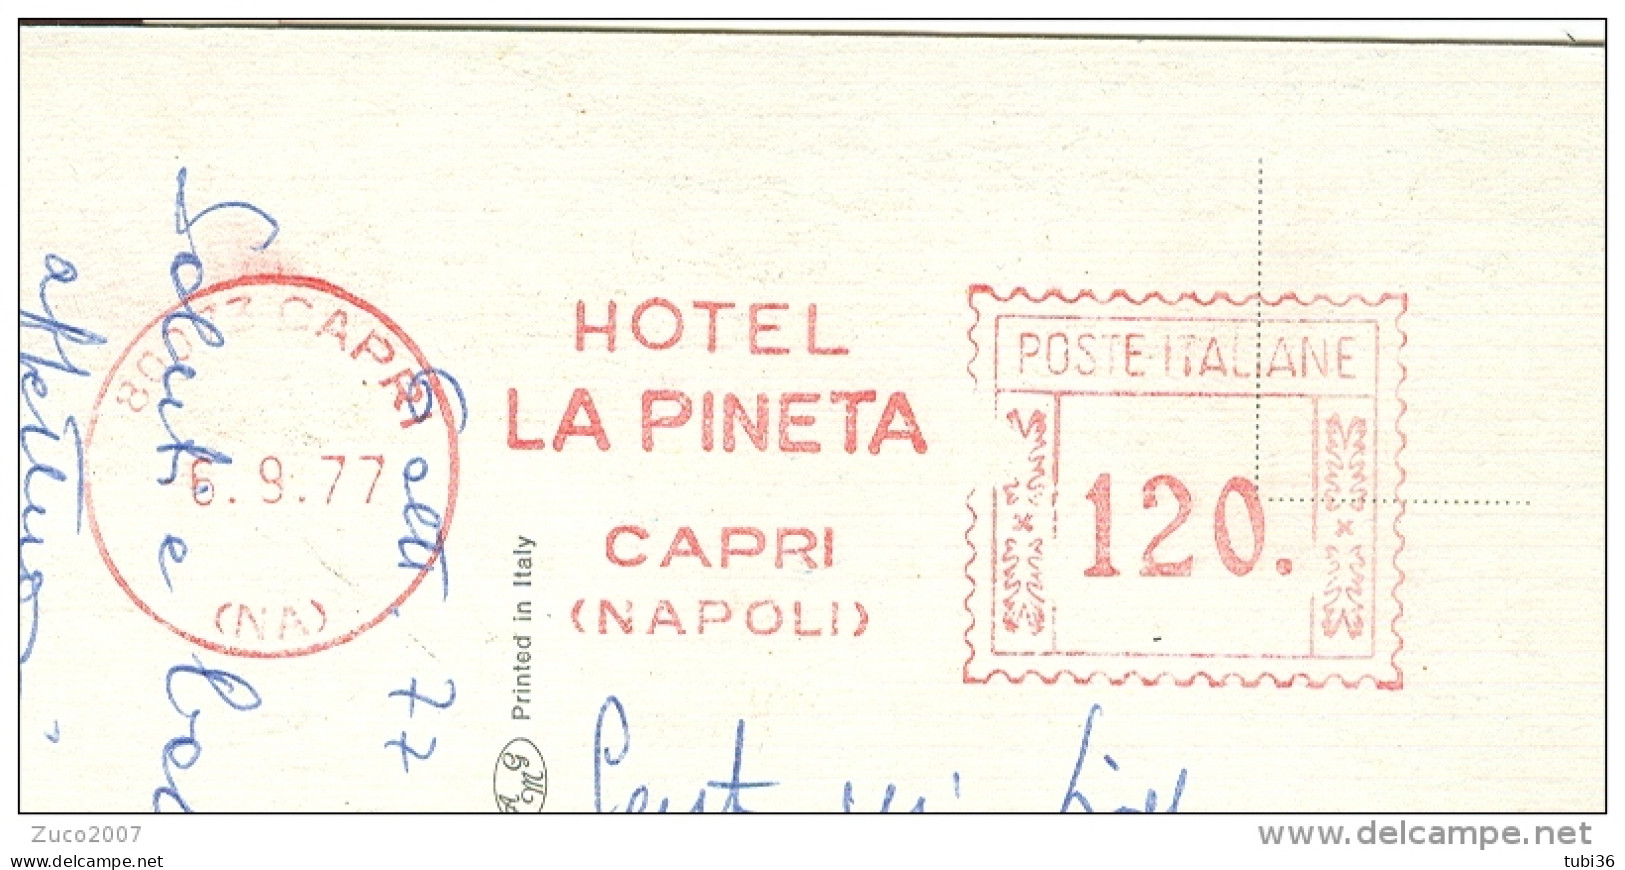 HOTEL LA PINETA, CAPRI, NAPOLI, AFFRANCATURA MECCANICA ROSSA £.120, 1977, CARTOLINA PER RAVENNA, - Hôtellerie - Horeca